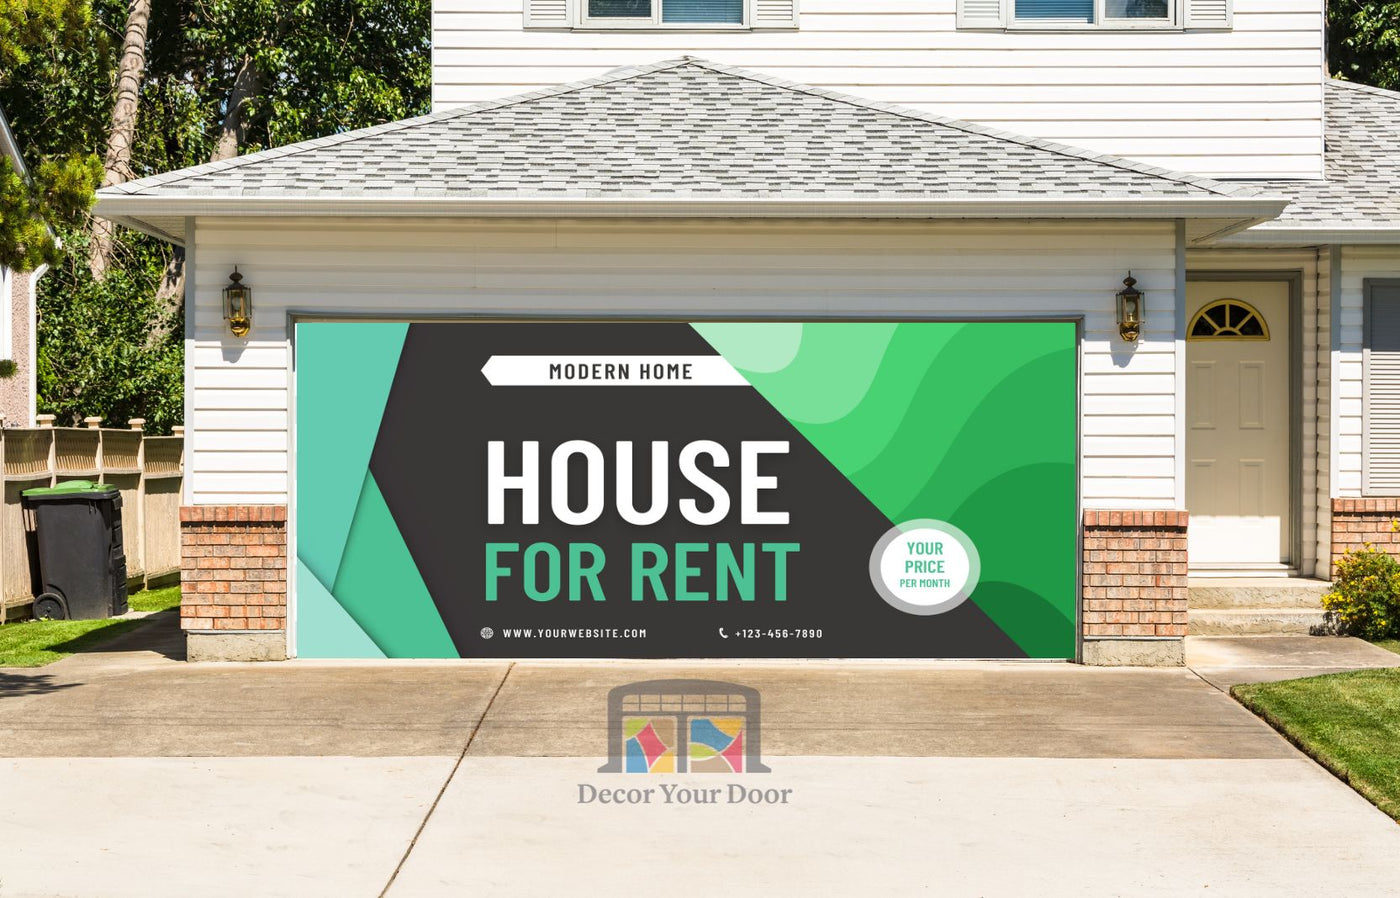 House For Rent Garage Door Cover Wrap Backdrop